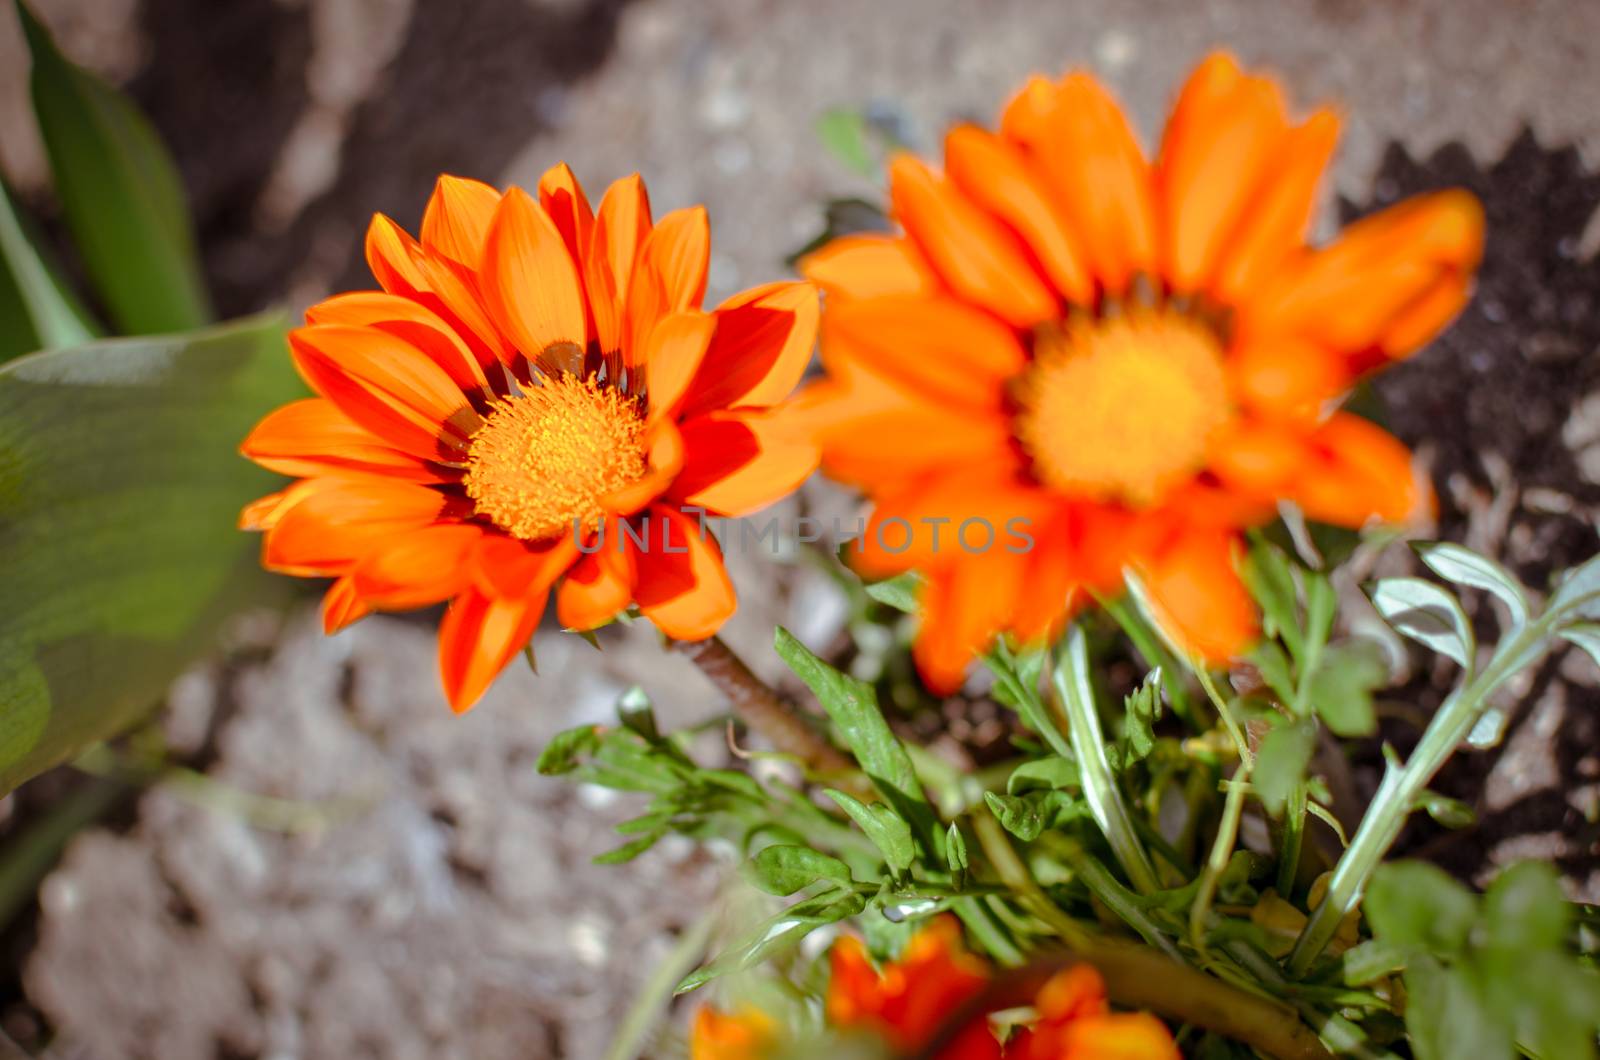 Closeup of several gazania rigens flowers with orange petals